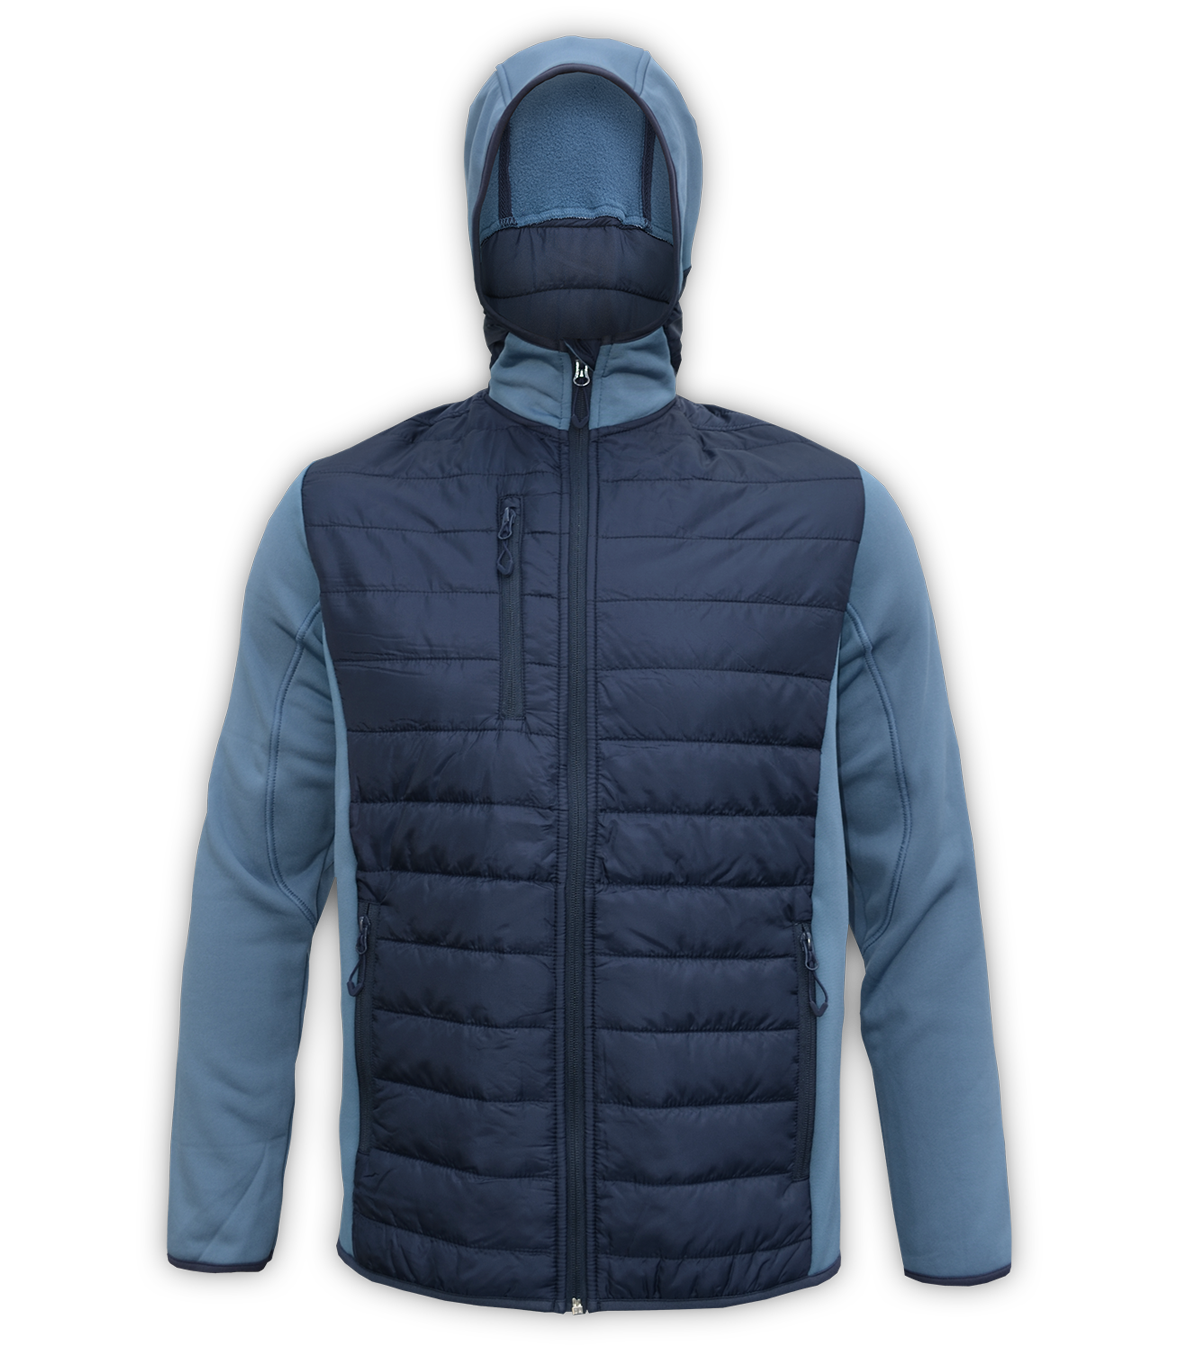 Renegade-mens-full-zip-fleece-jacket-woven-power stretch-blue-ski-jacket-light-hood-pockets